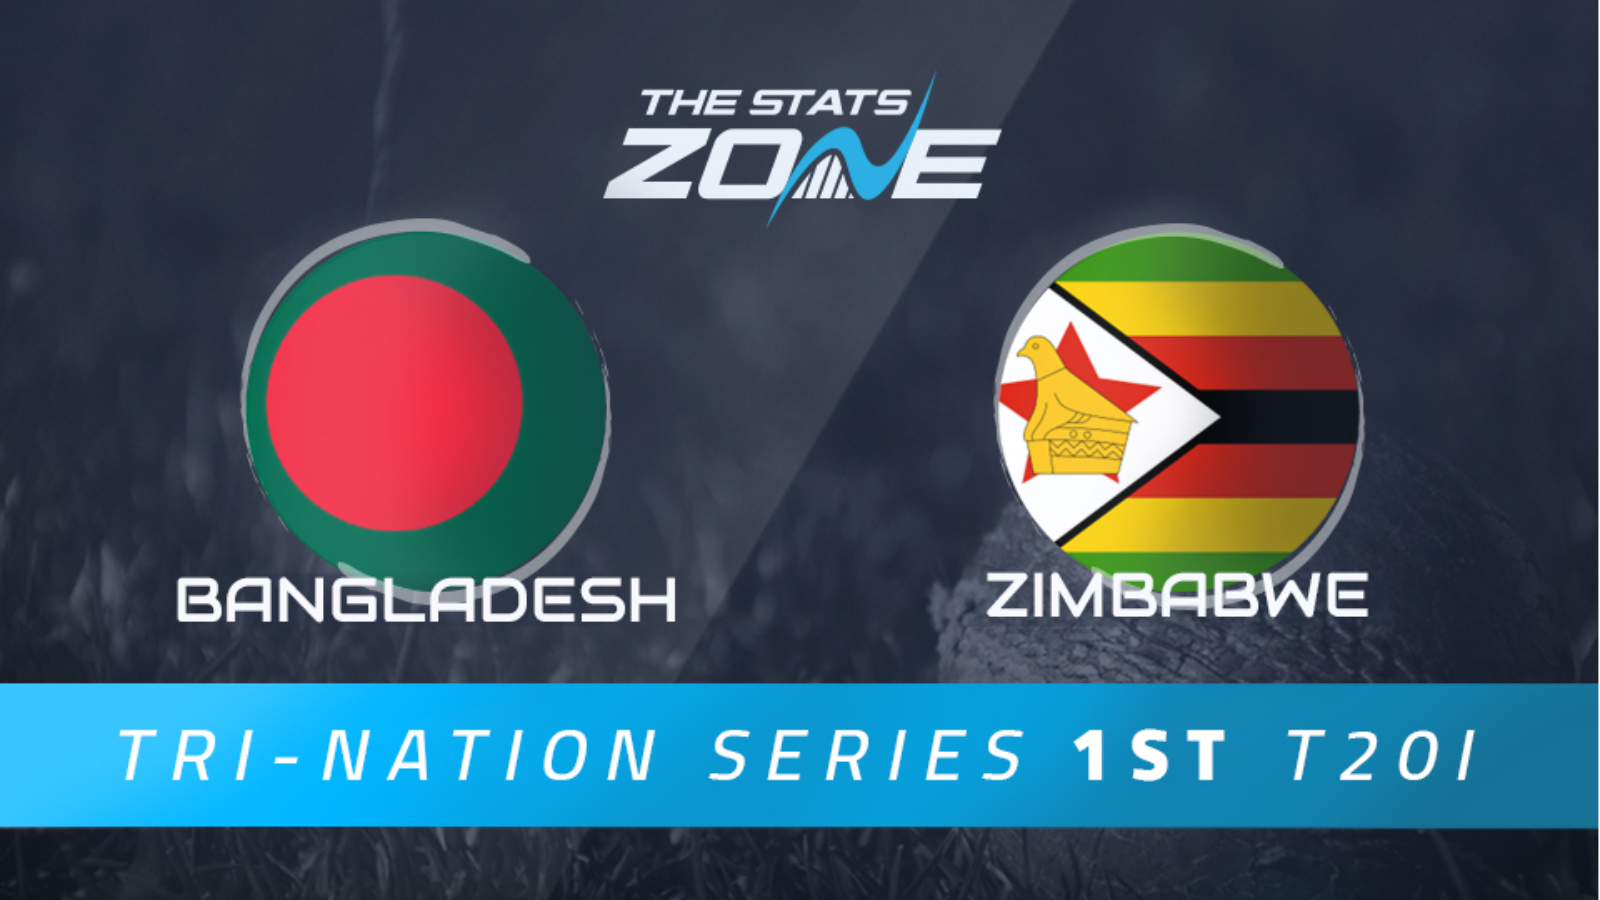 Zimbabwe bangladesh Zimbabwe and